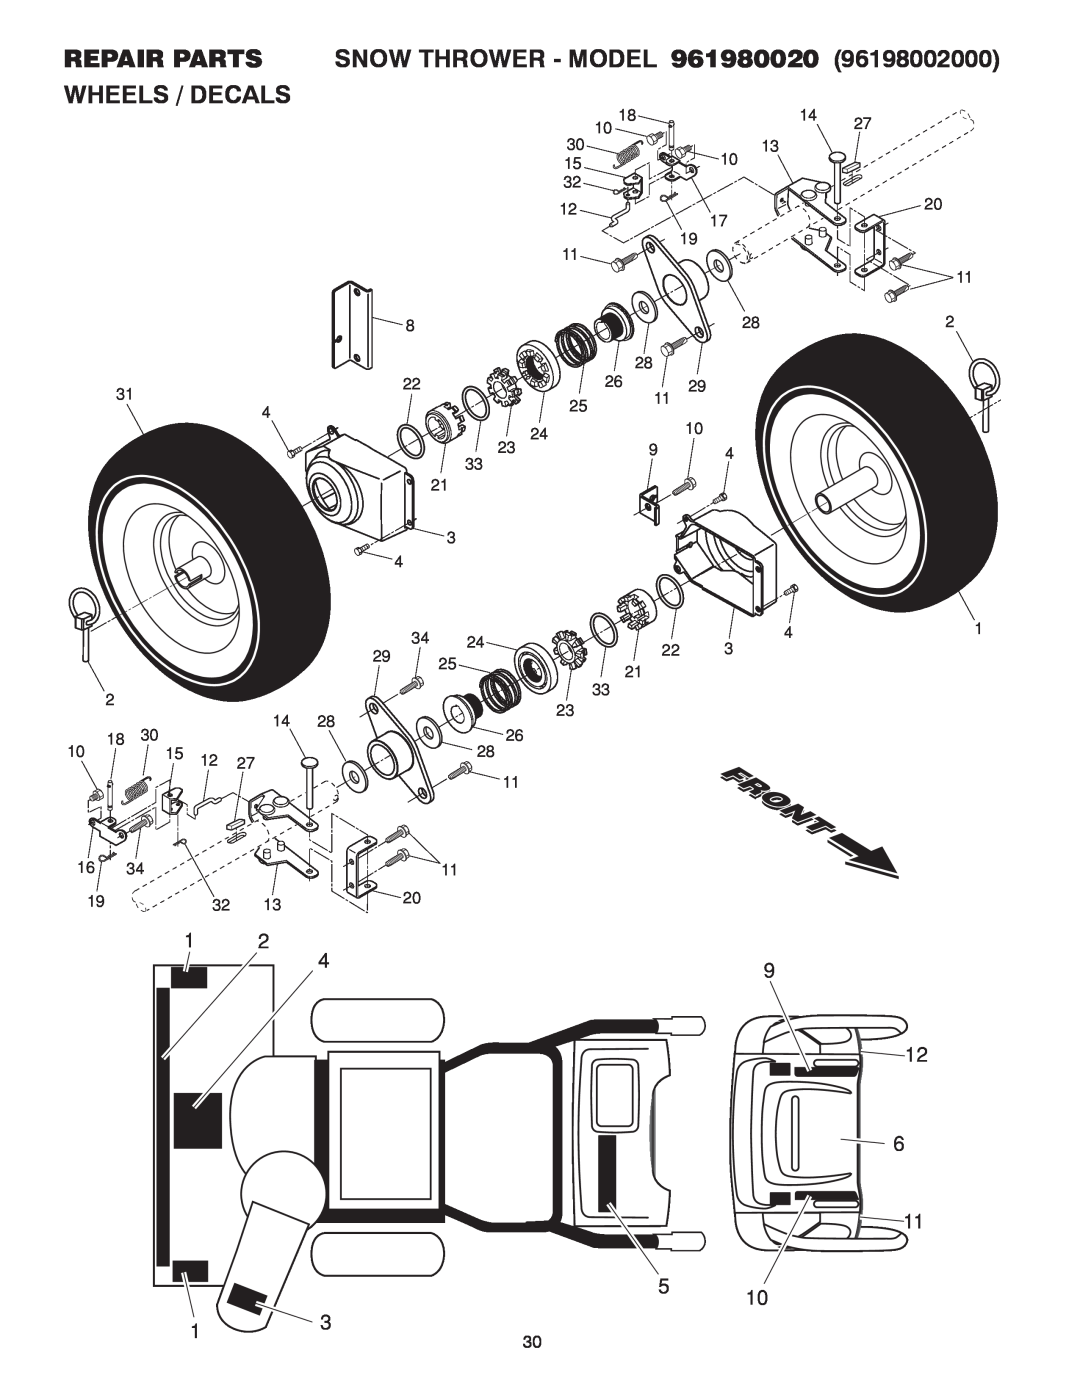 Poulan 415308, 96198002000 owner manual Repair Parts Wheels / Decals, Snow Thrower - Model,   